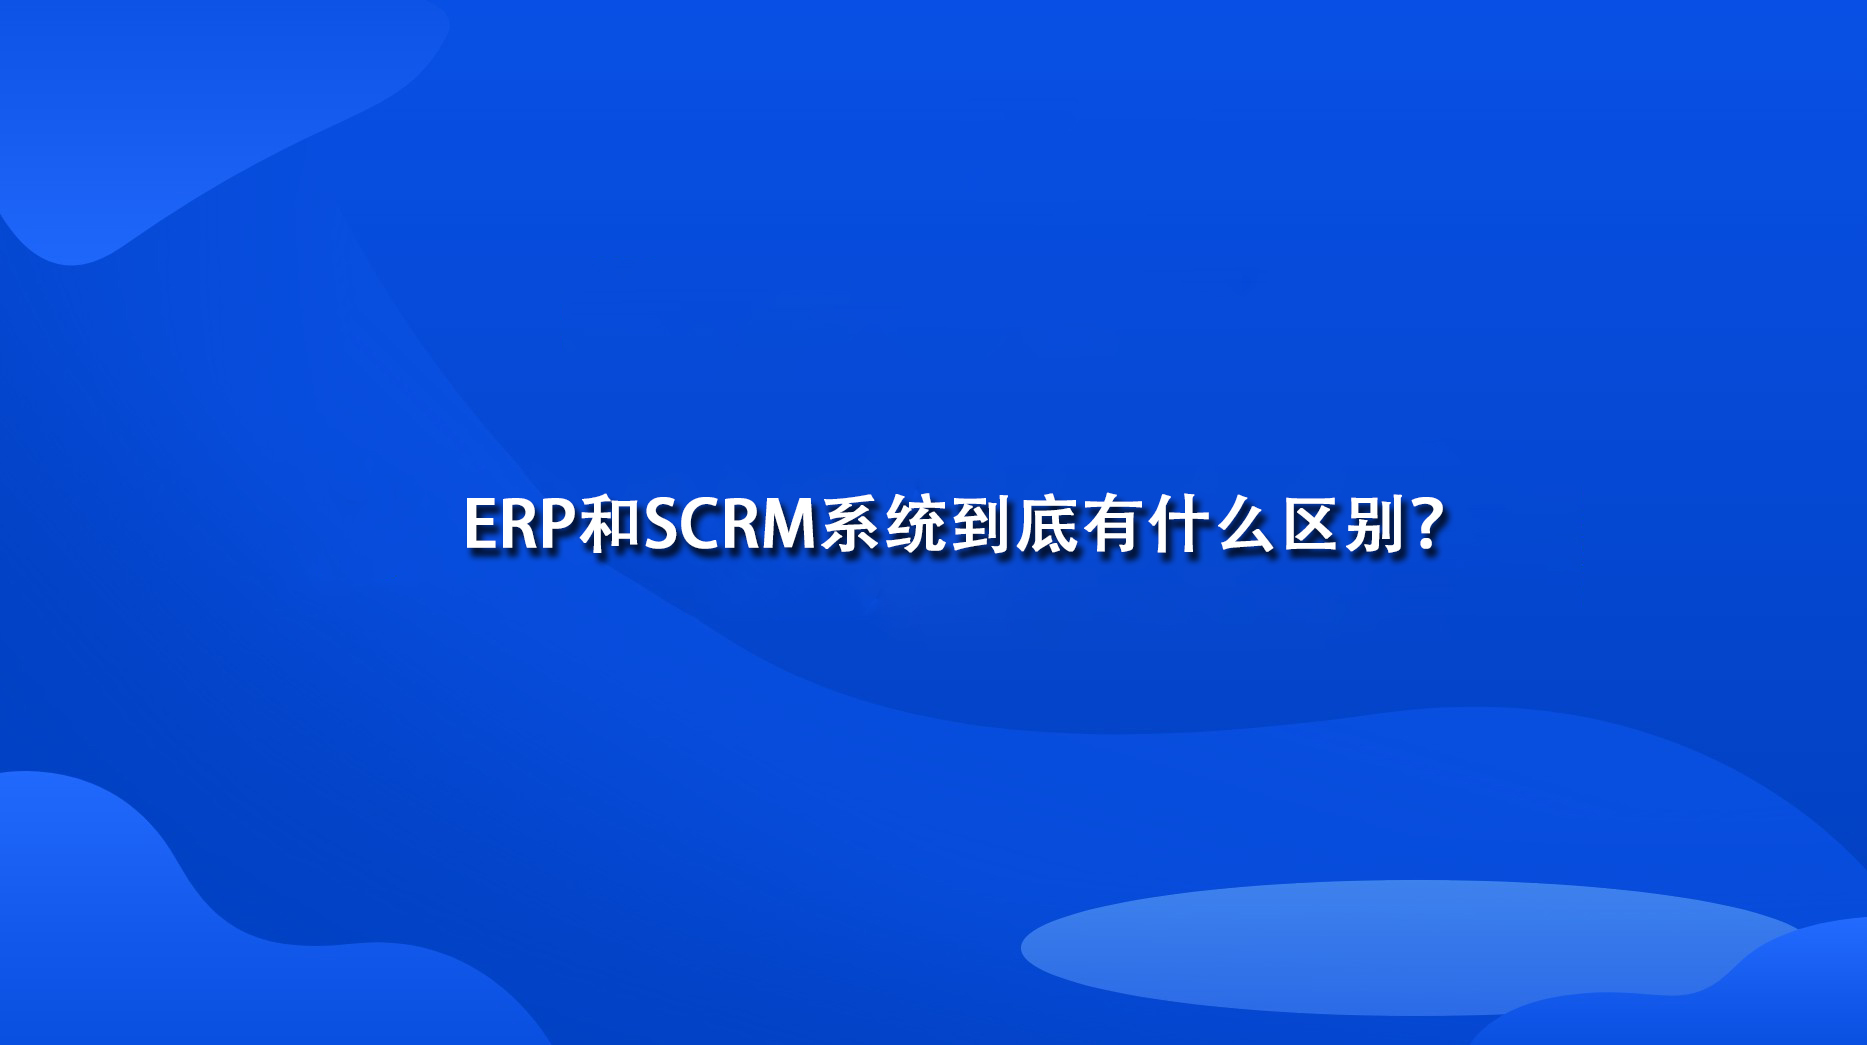 ERP和SCRM系统到底有什么区别？